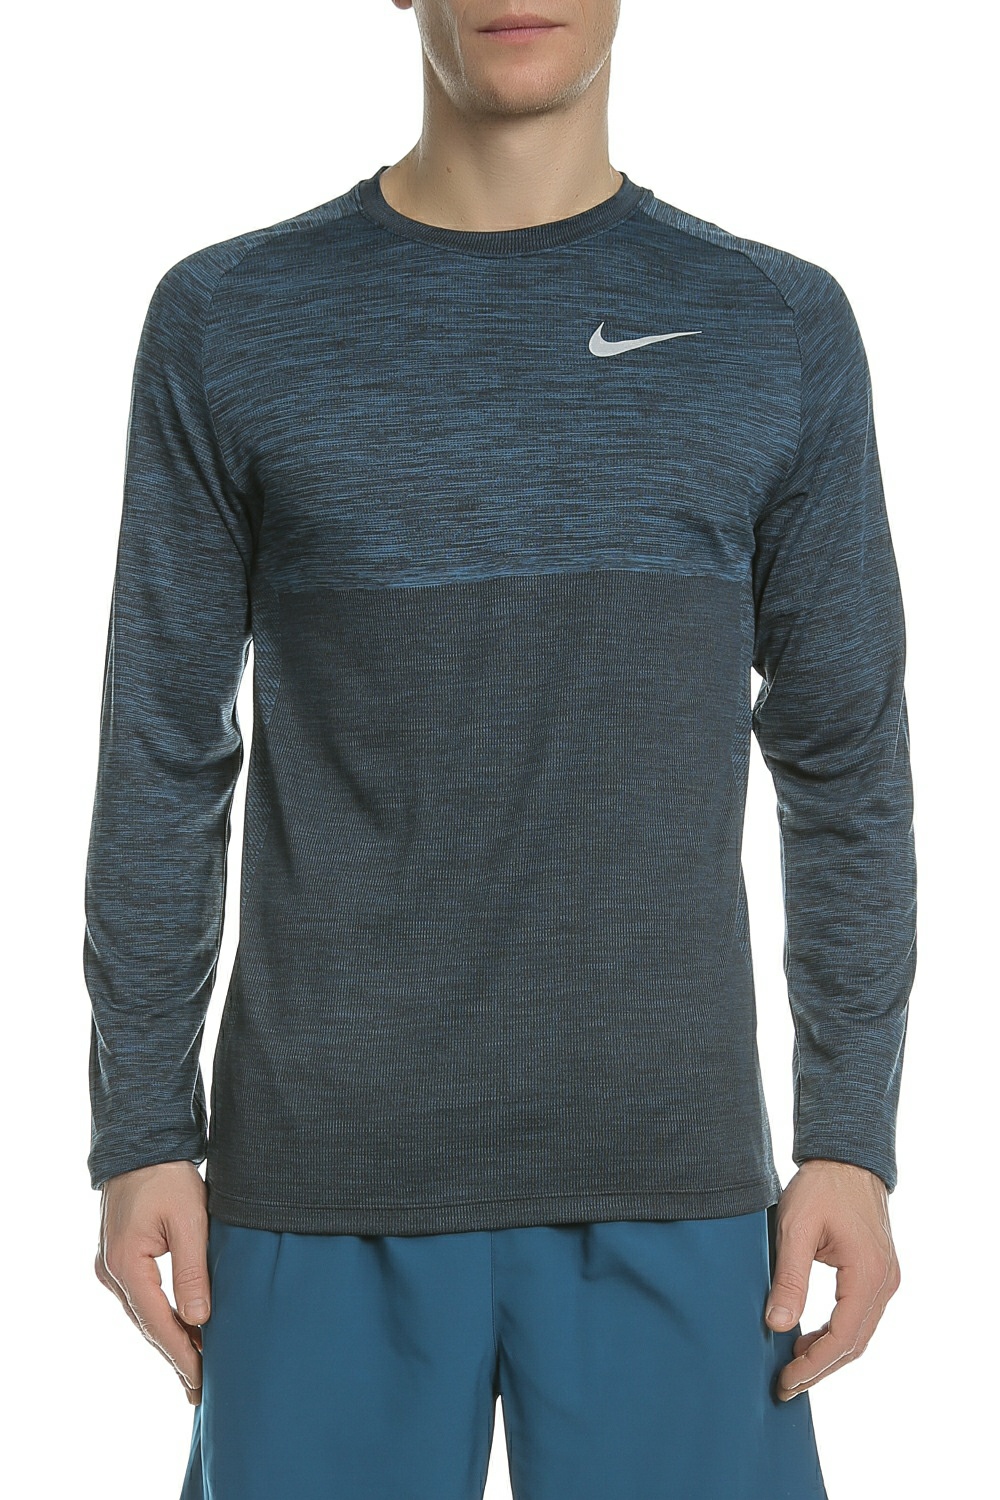 NIKE Ανδρική μακρυμάνικη μπλούζα Nike DRY MEDALIST μπλε